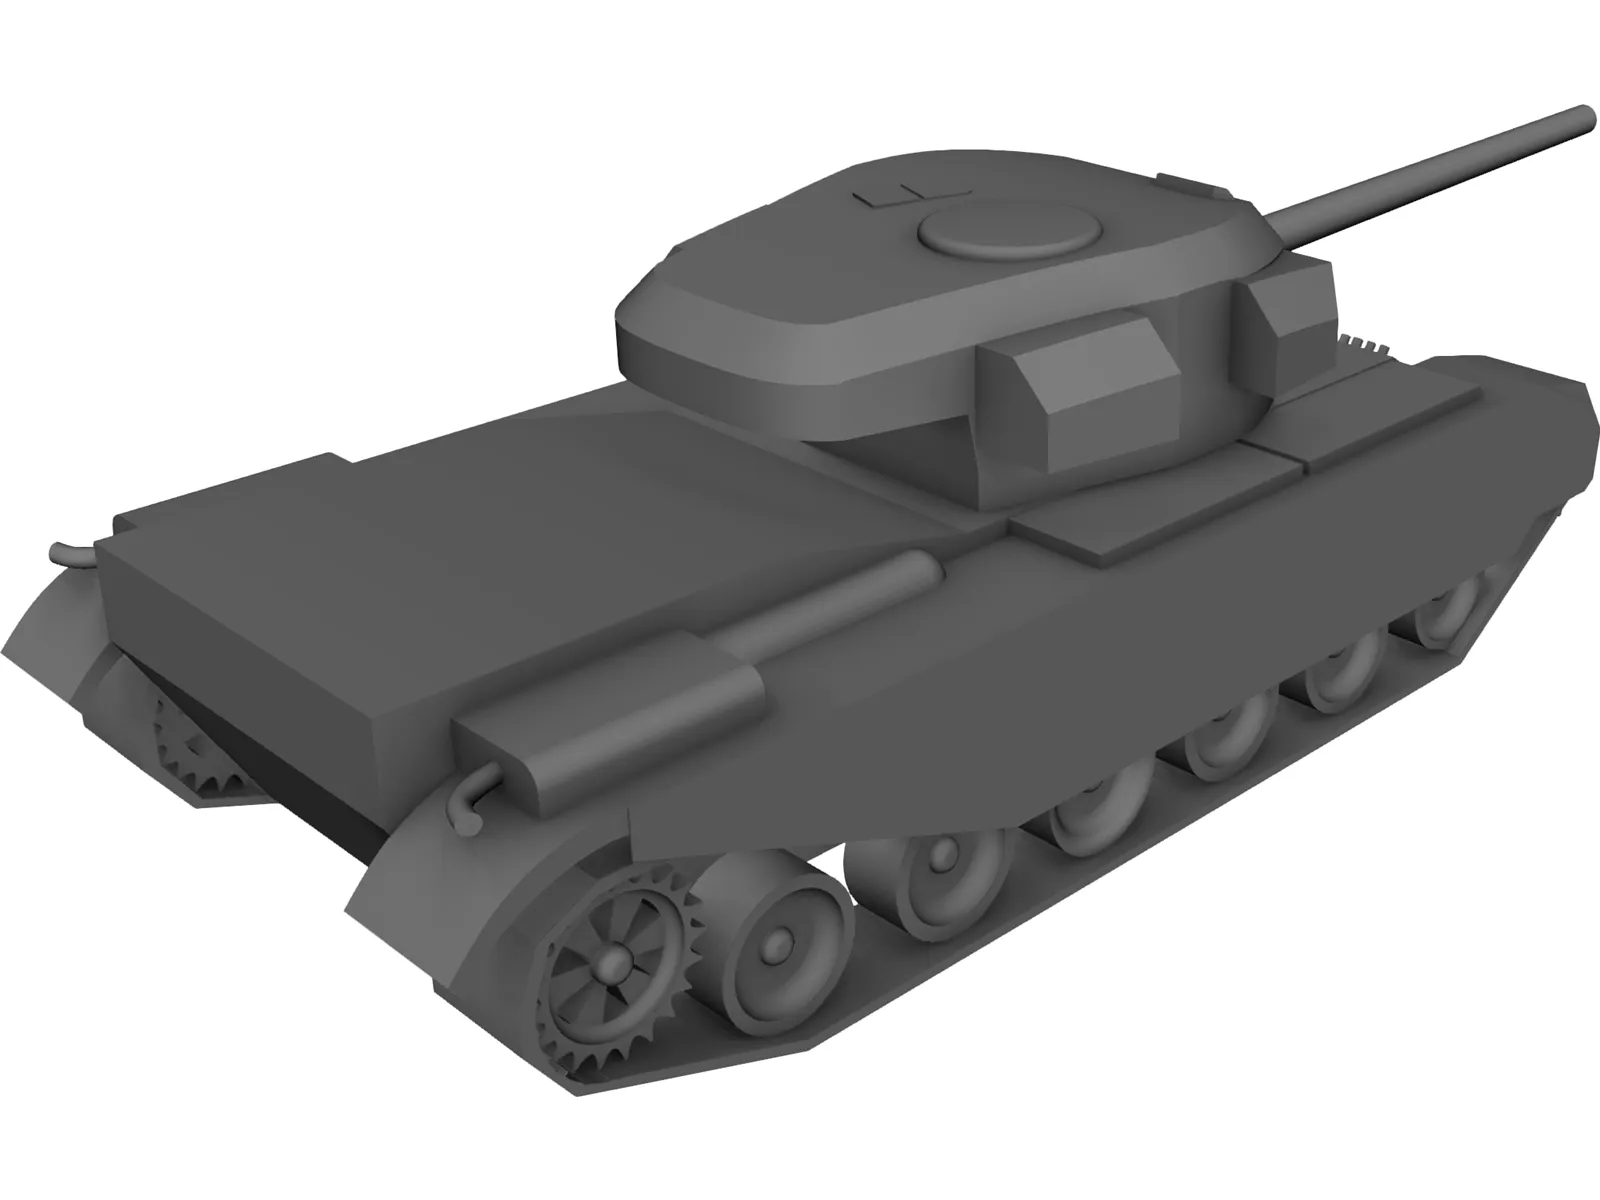 Centurion Tank 3D Model